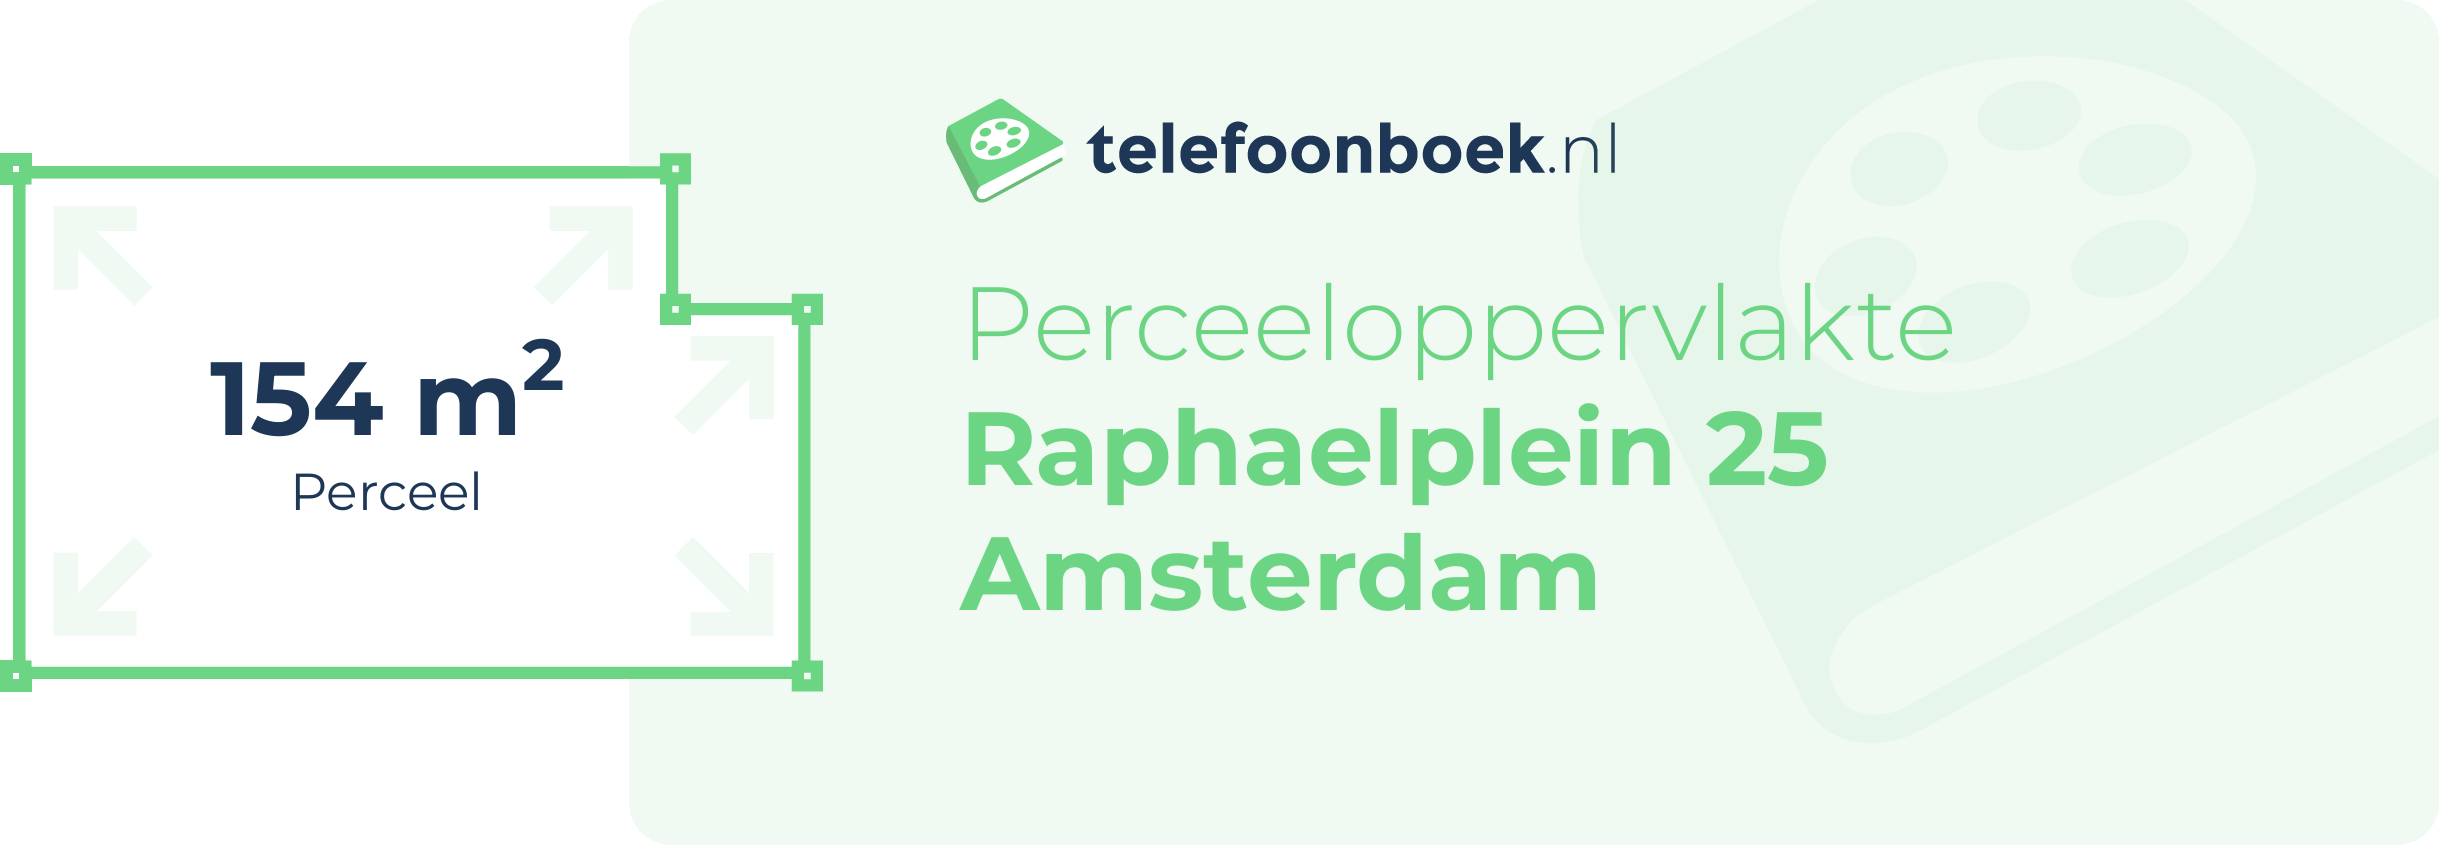 Perceeloppervlakte Raphaelplein 25 Amsterdam